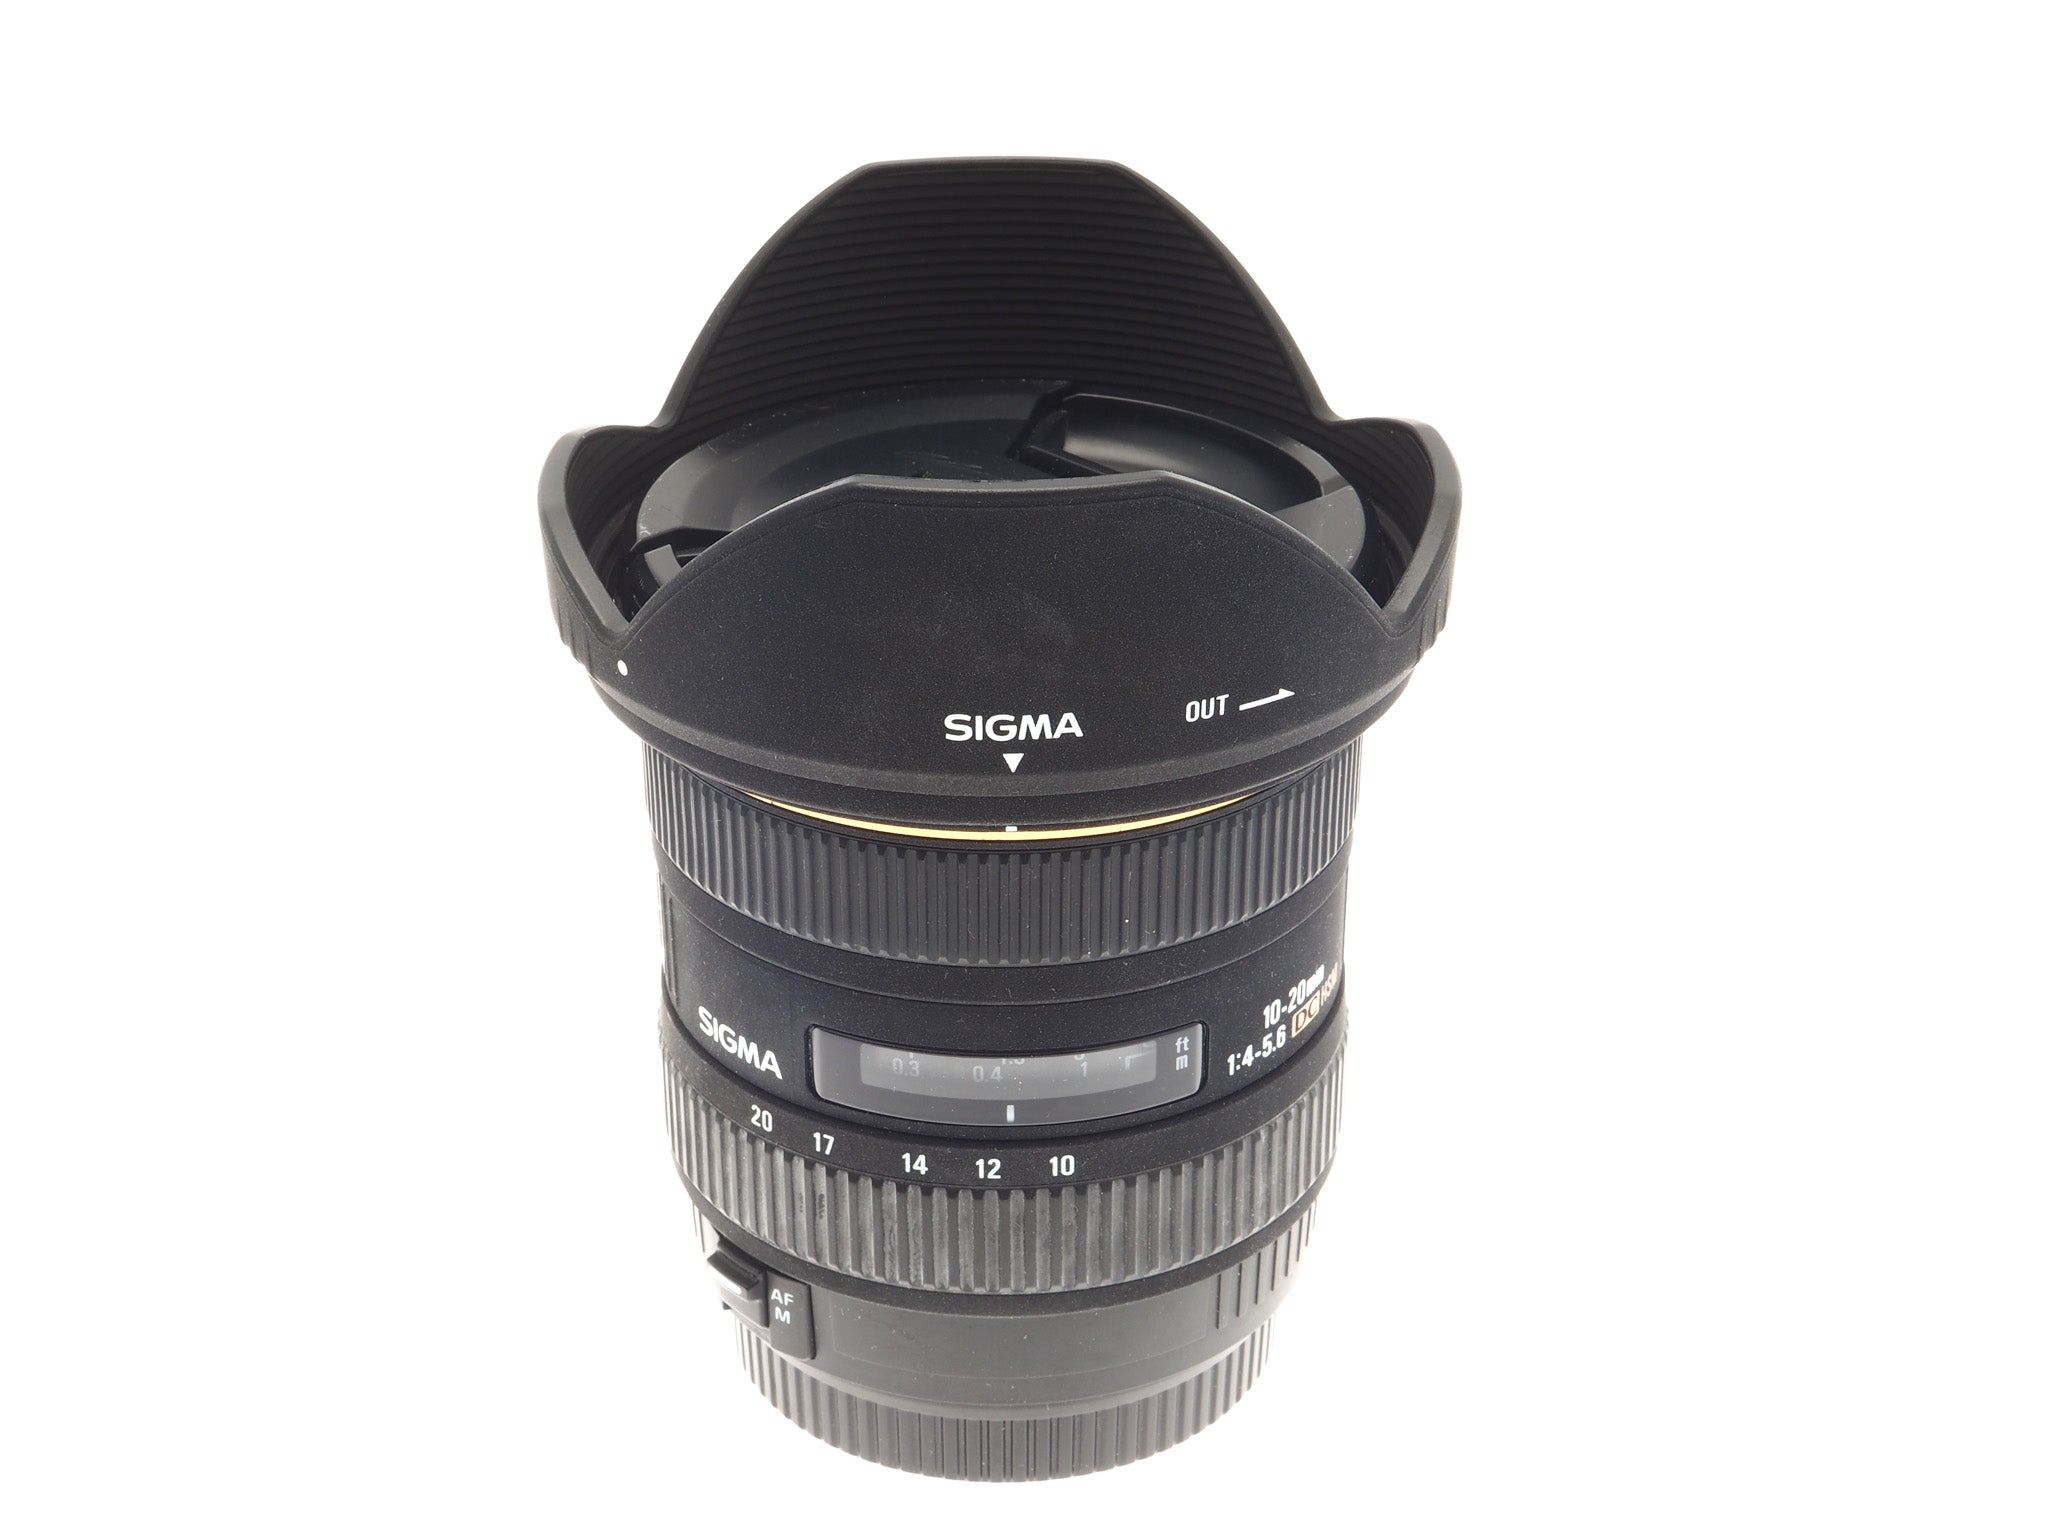 Sigma 10-20mm f4-5.6 EX DC HSM - Lens